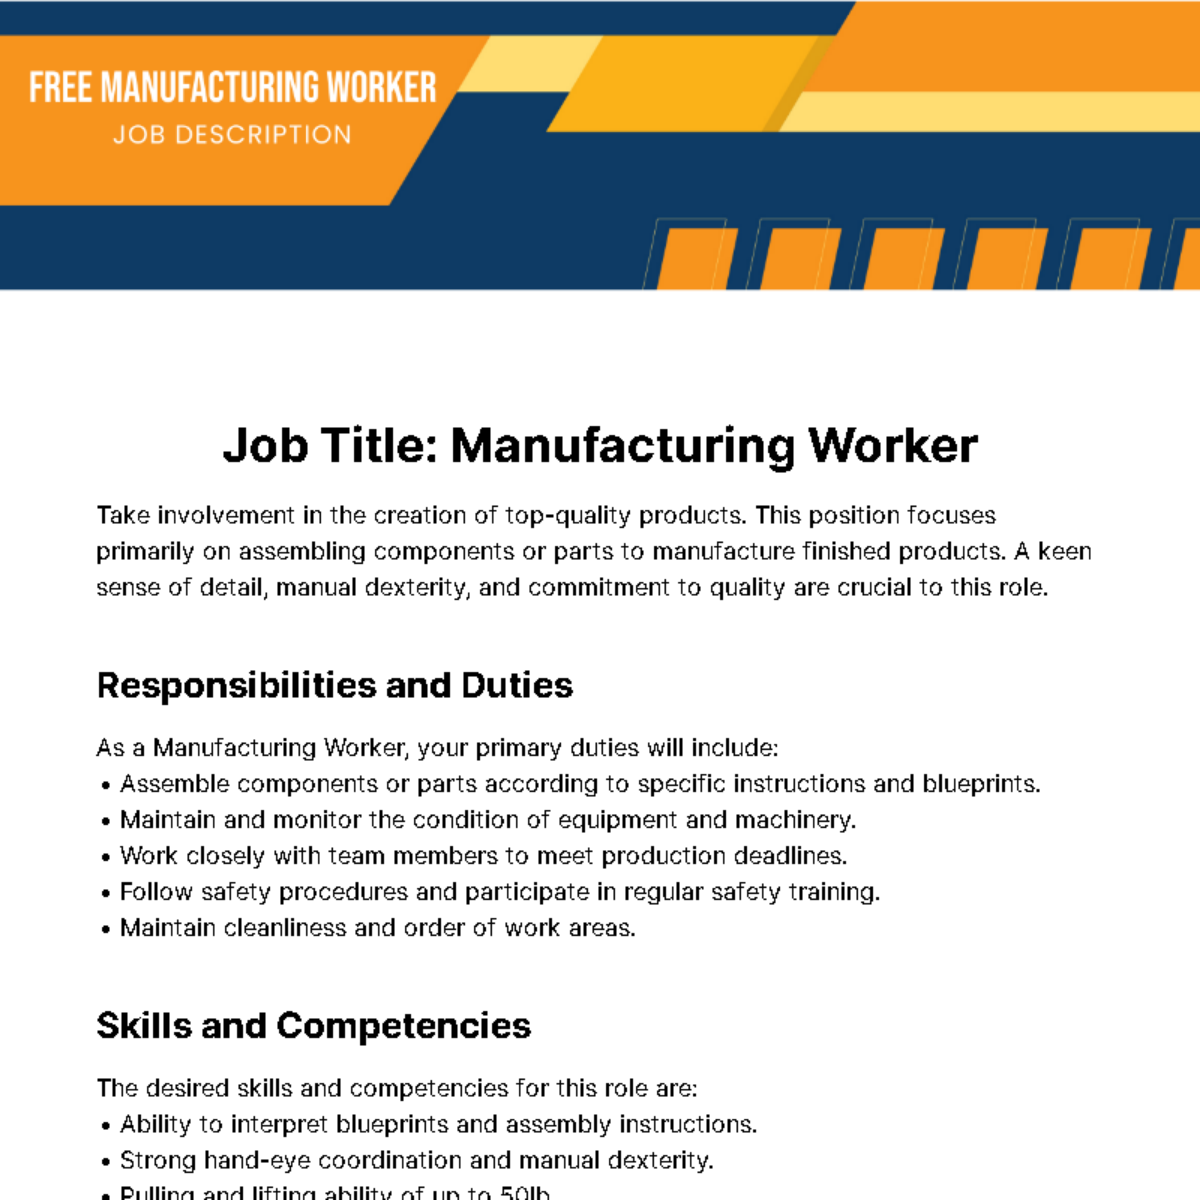 Free Manufacturing Worker Job Description Template